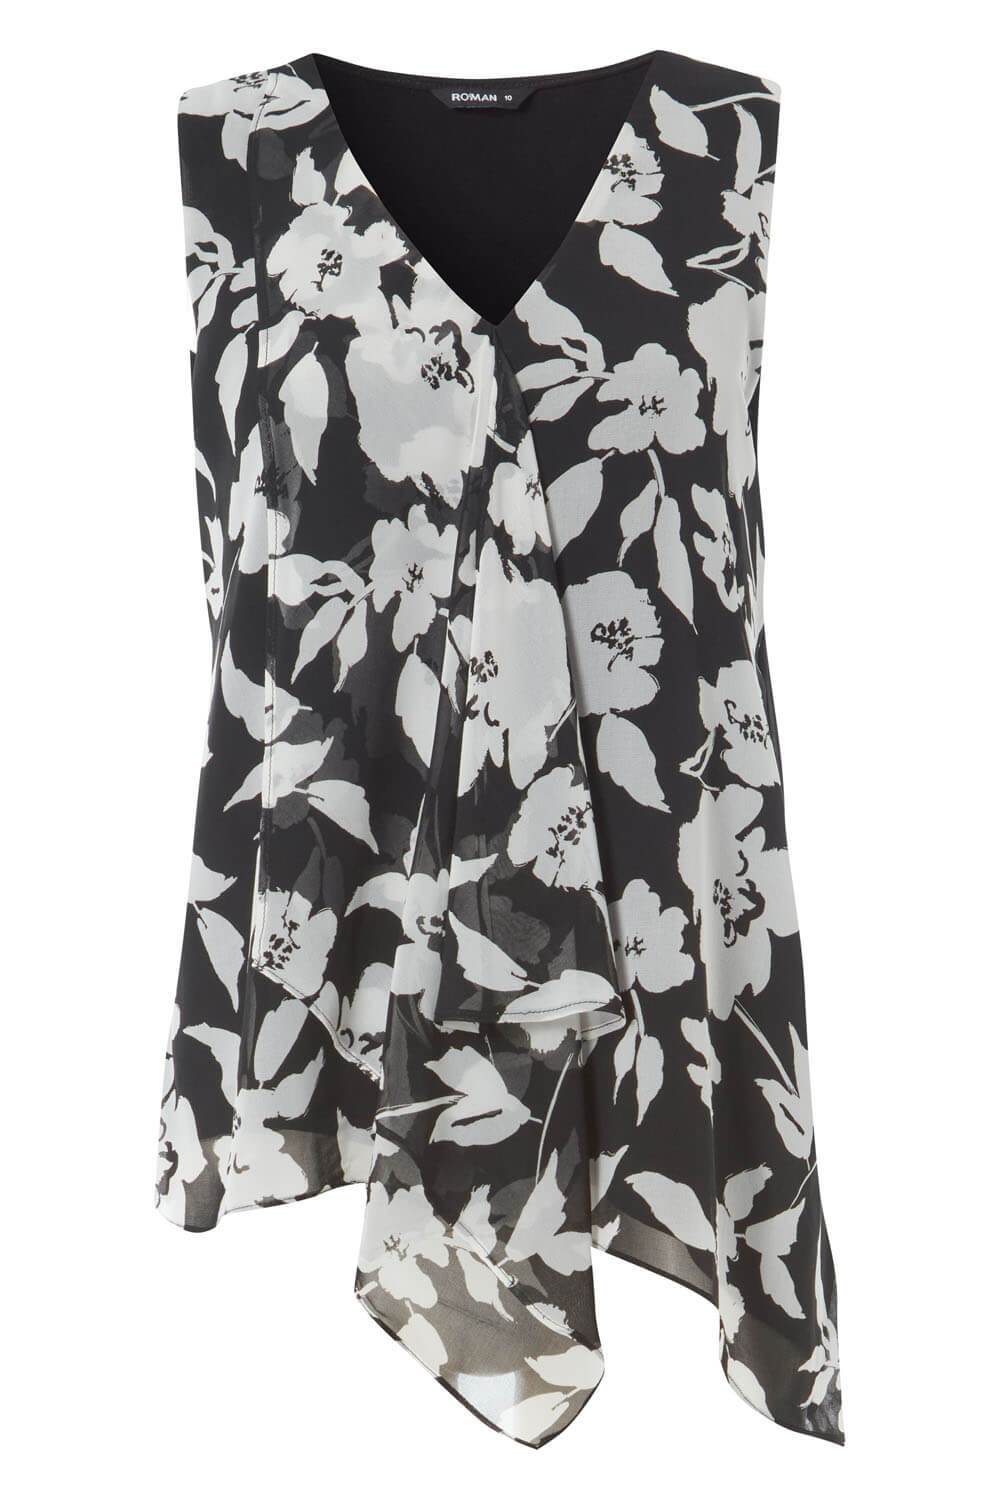 Black Floral Print Sleeveless Chiffon Overlay Top, Image 4 of 4